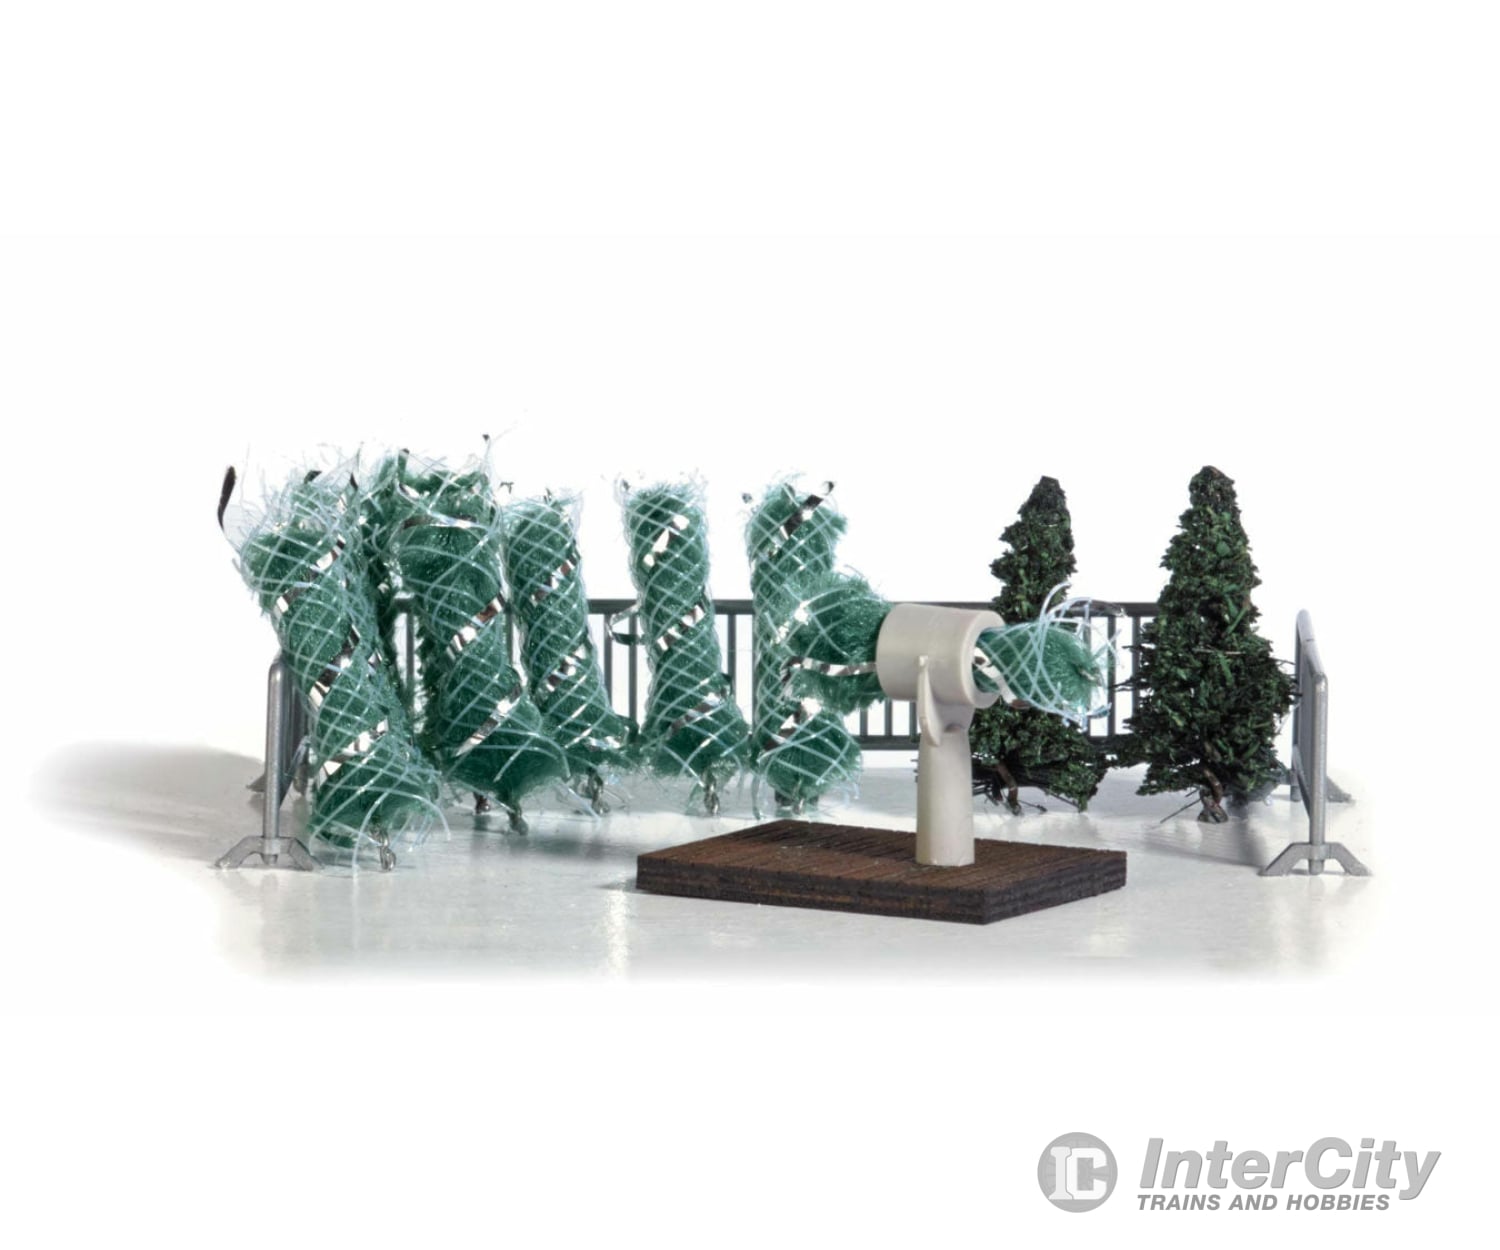 Busch Gmbh & Co Kg Ho 1182 Christmas Tree Lot Miniature Scene Scenery Details